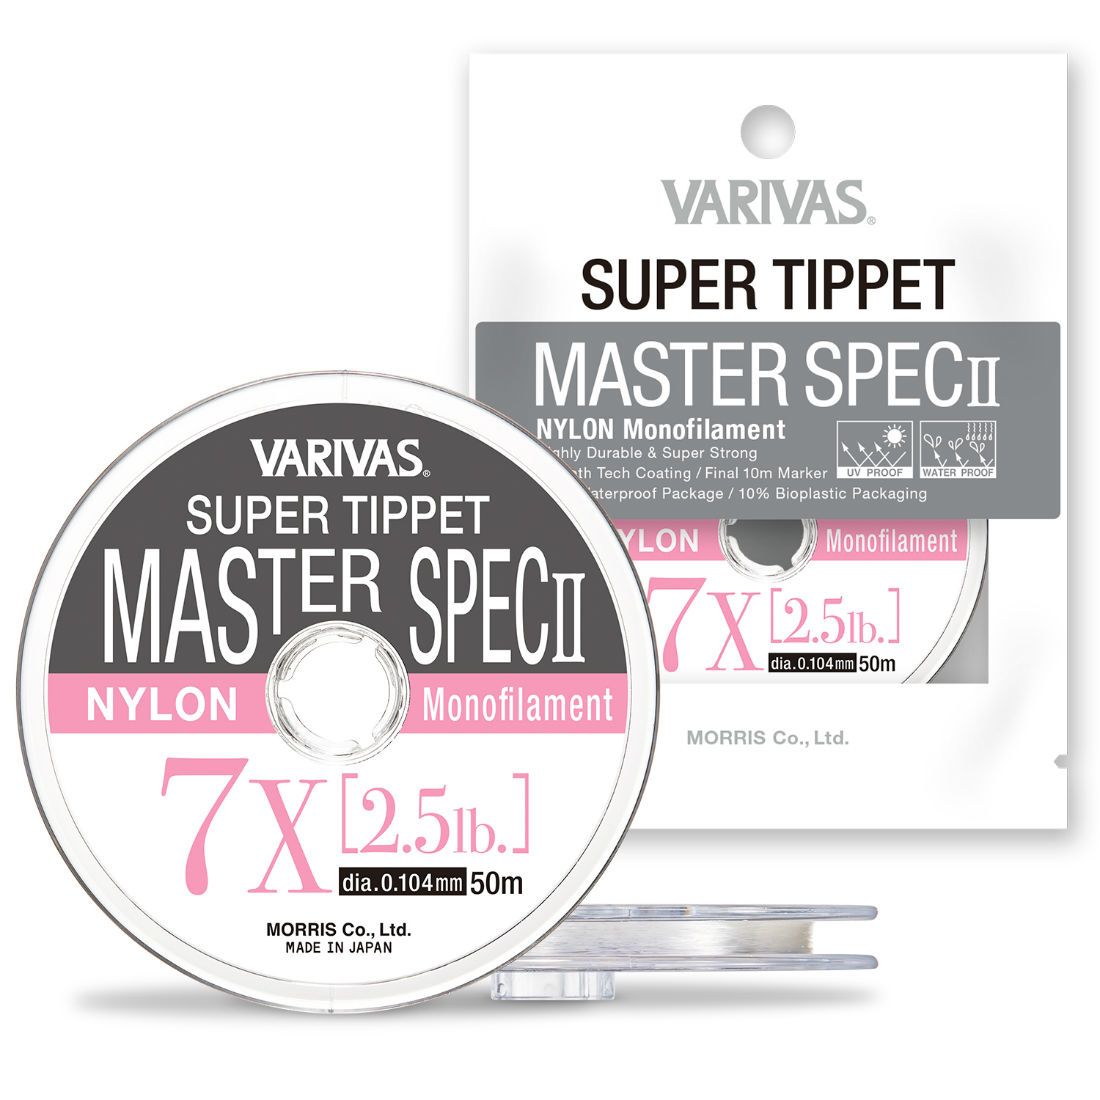 FIR VARIVAS SUPER TIPPET MASTER SPEC ll NYLON 6X 50m 0.128mm 3.5lb